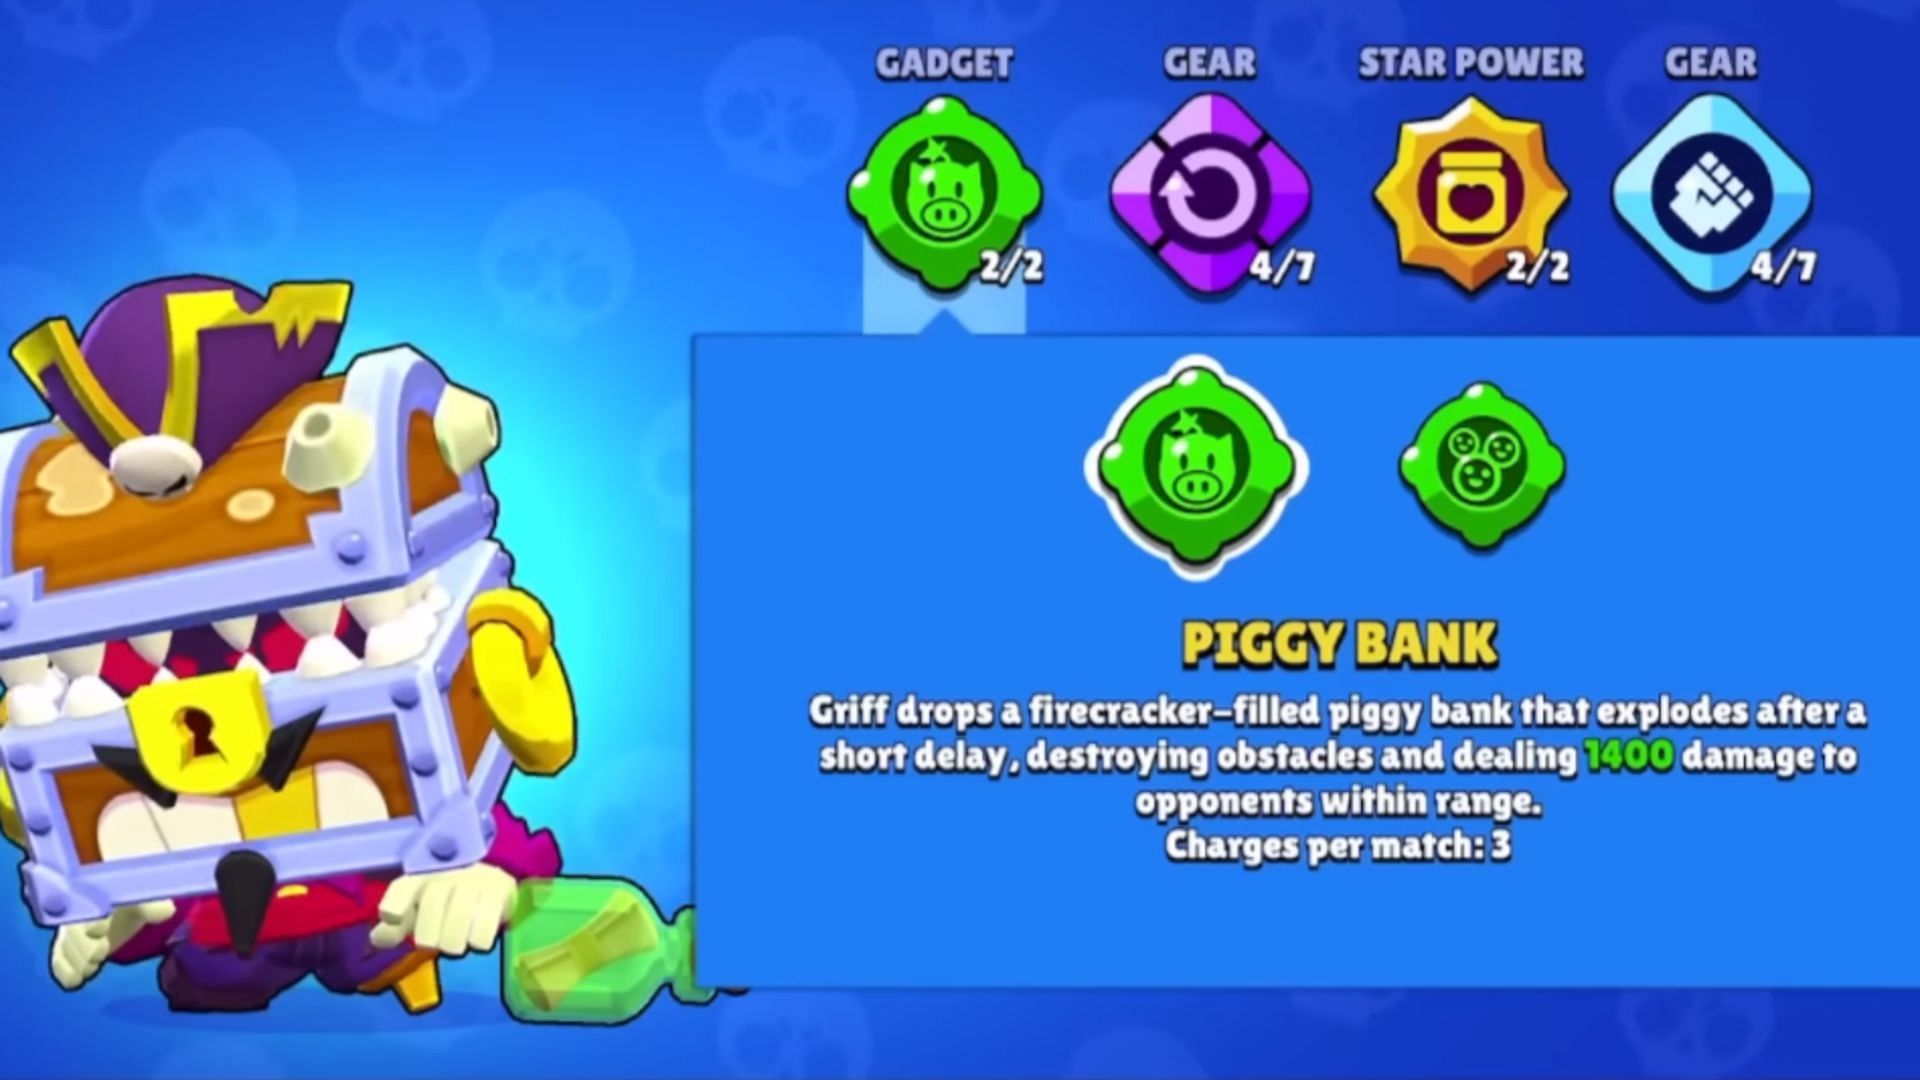 Piggy Bank Gadget (Image via Supercell)